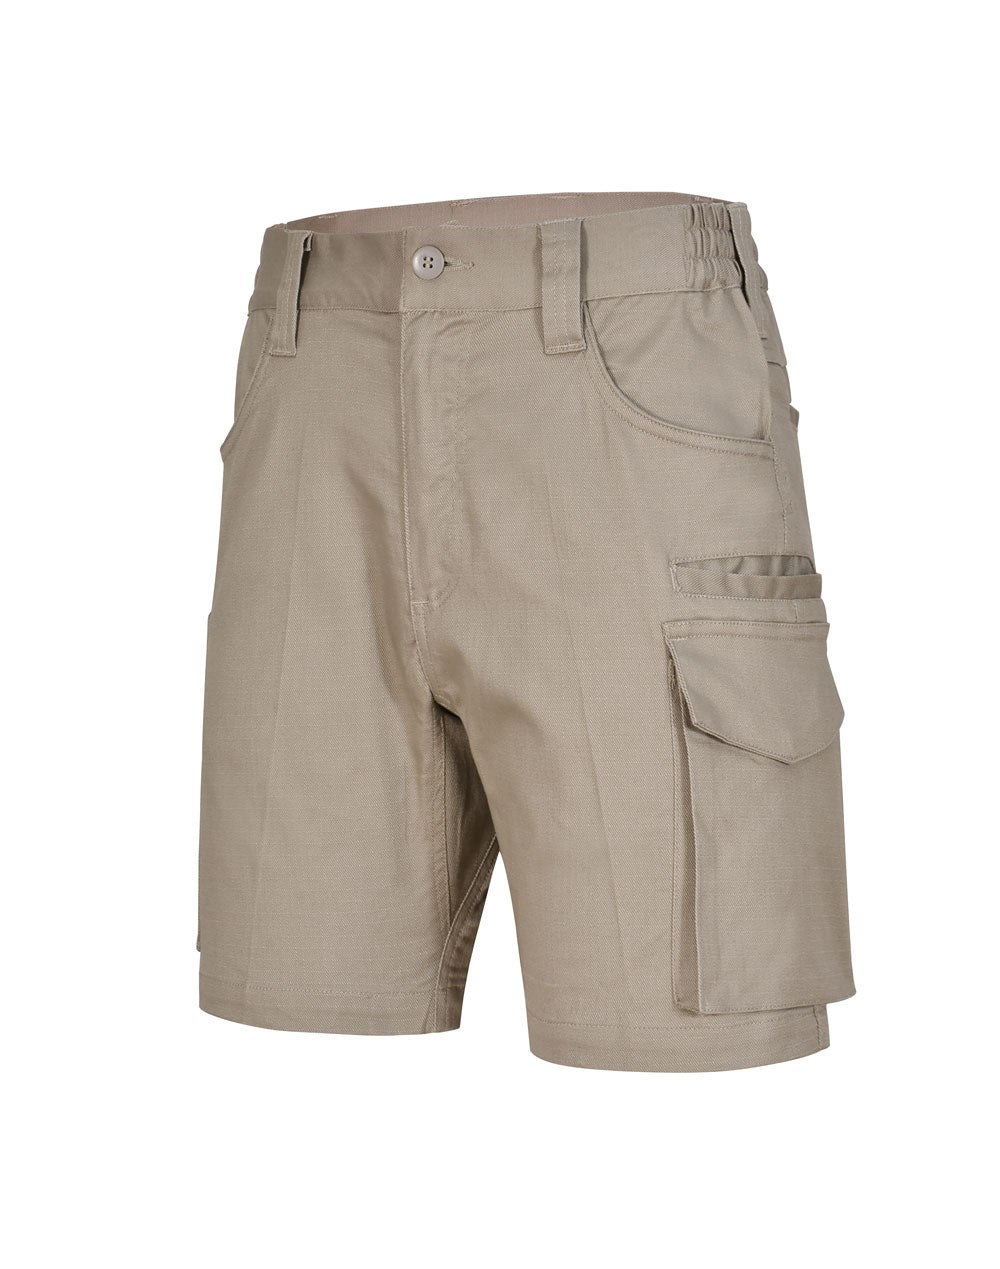 Unisex Cotton Stretch Rip Stop Work Shorts WP27 Work Wear Australian Industrial Wear 72R Sand 